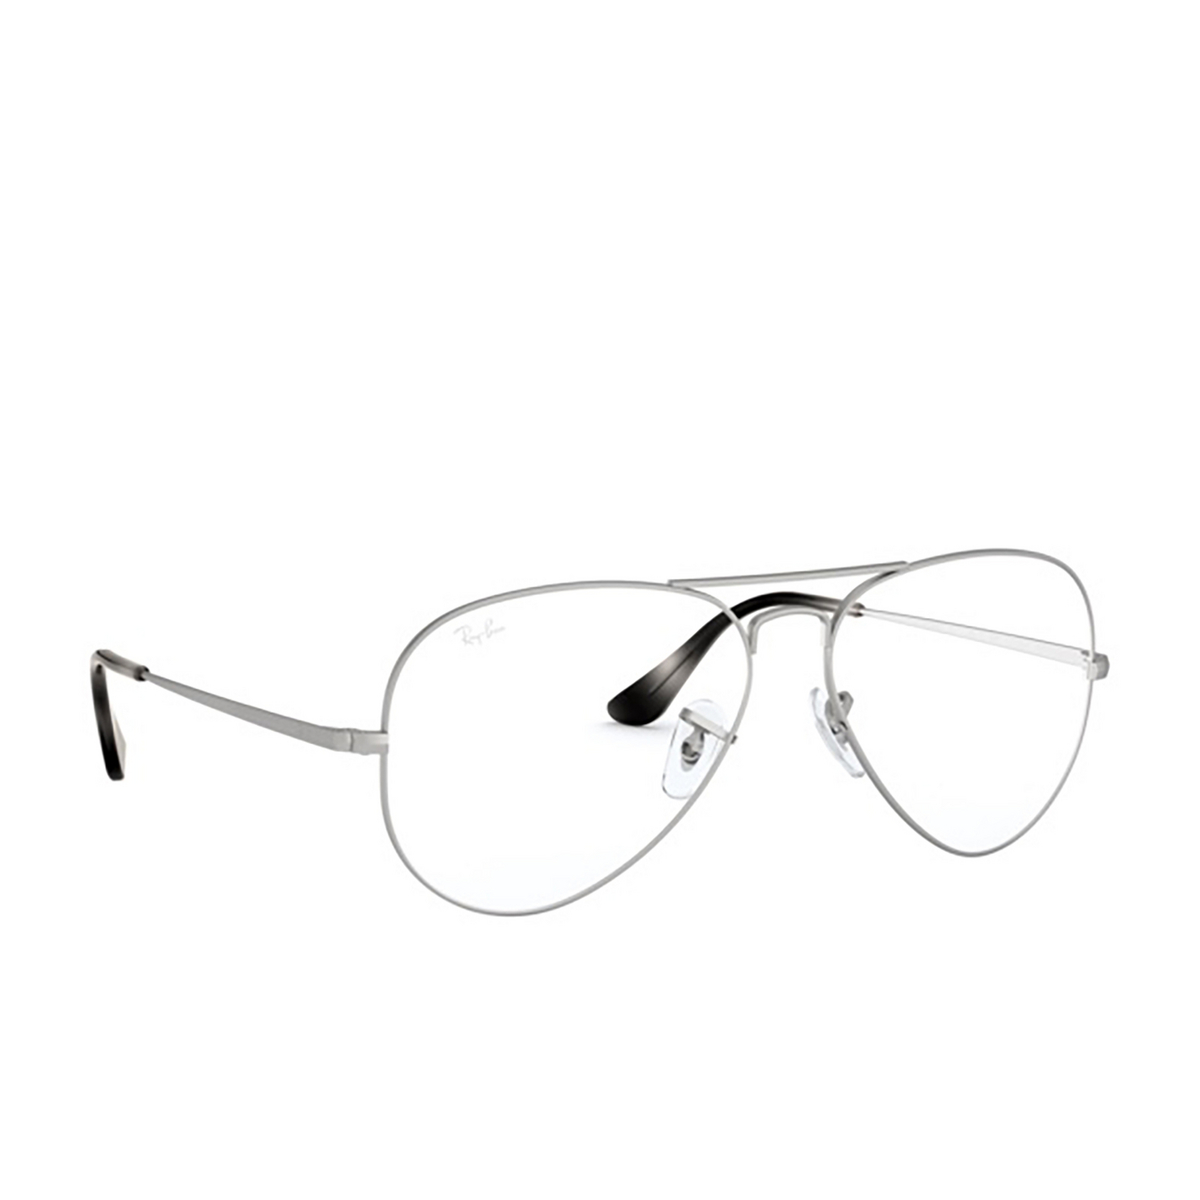 Ray-Ban® Aviator Eyeglasses: Aviator RX6489 color Matte Silver 2538 - three-quarters view.